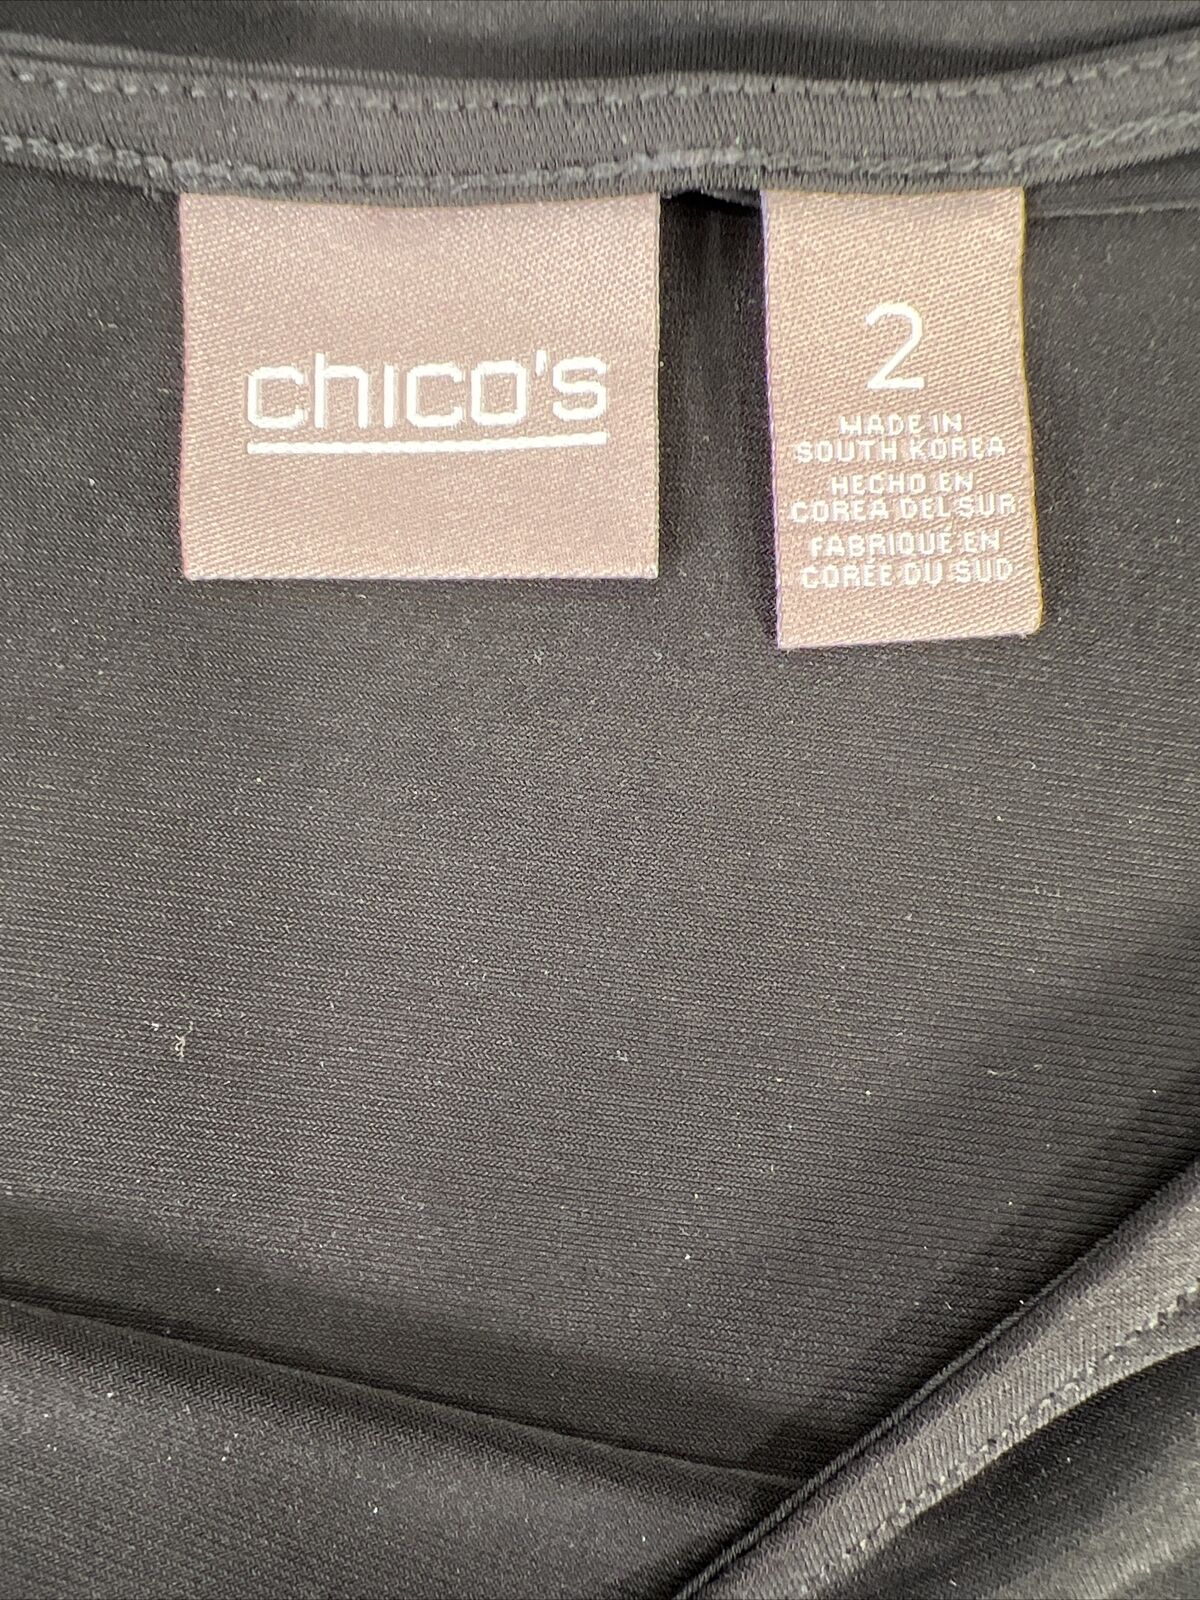 Chico's Women's Black Short Sleeve Stretch Top Shirt - 2/US L